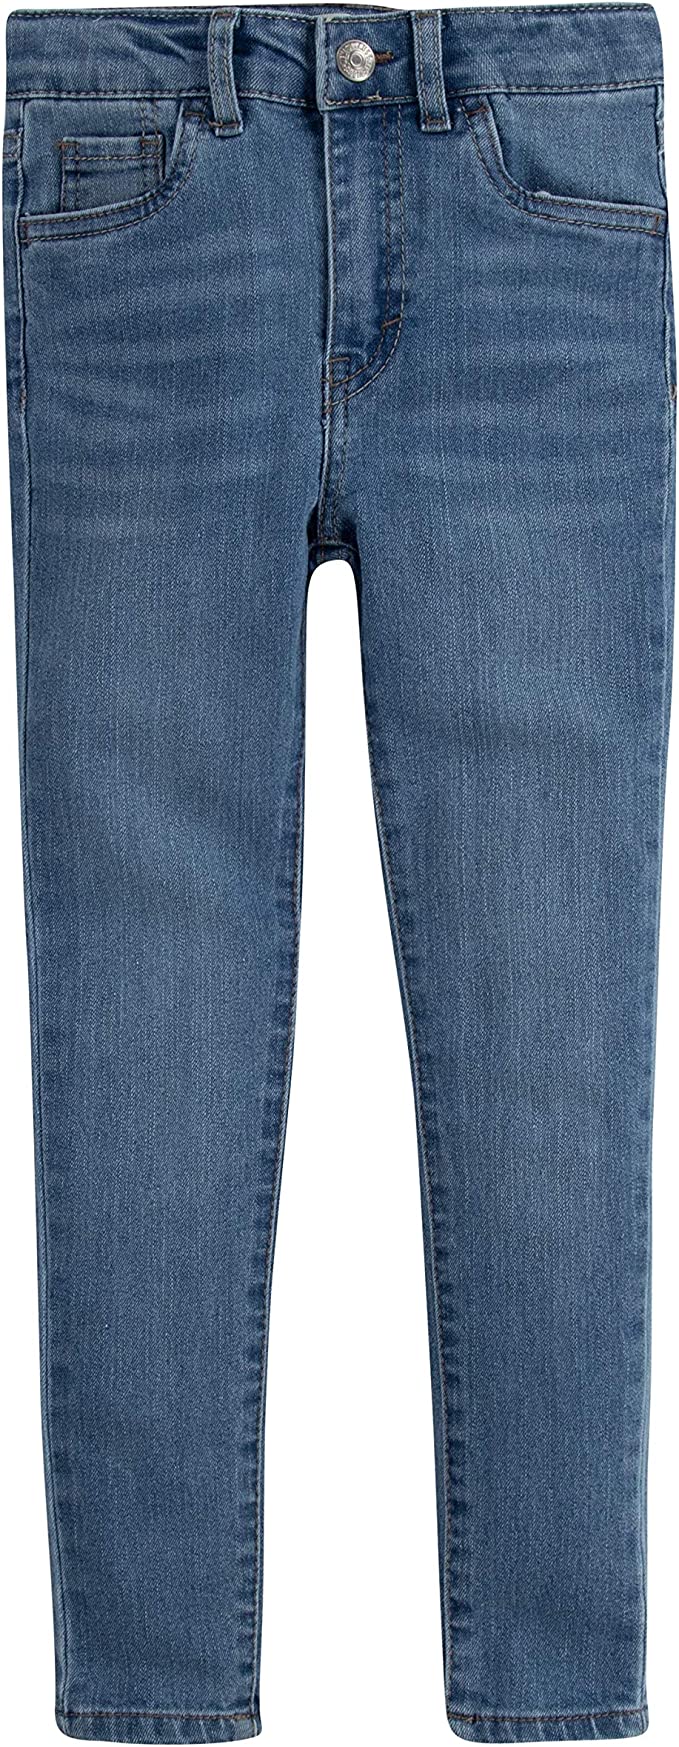 Girls' 720 High Rise Super Skinny Fit Jeans